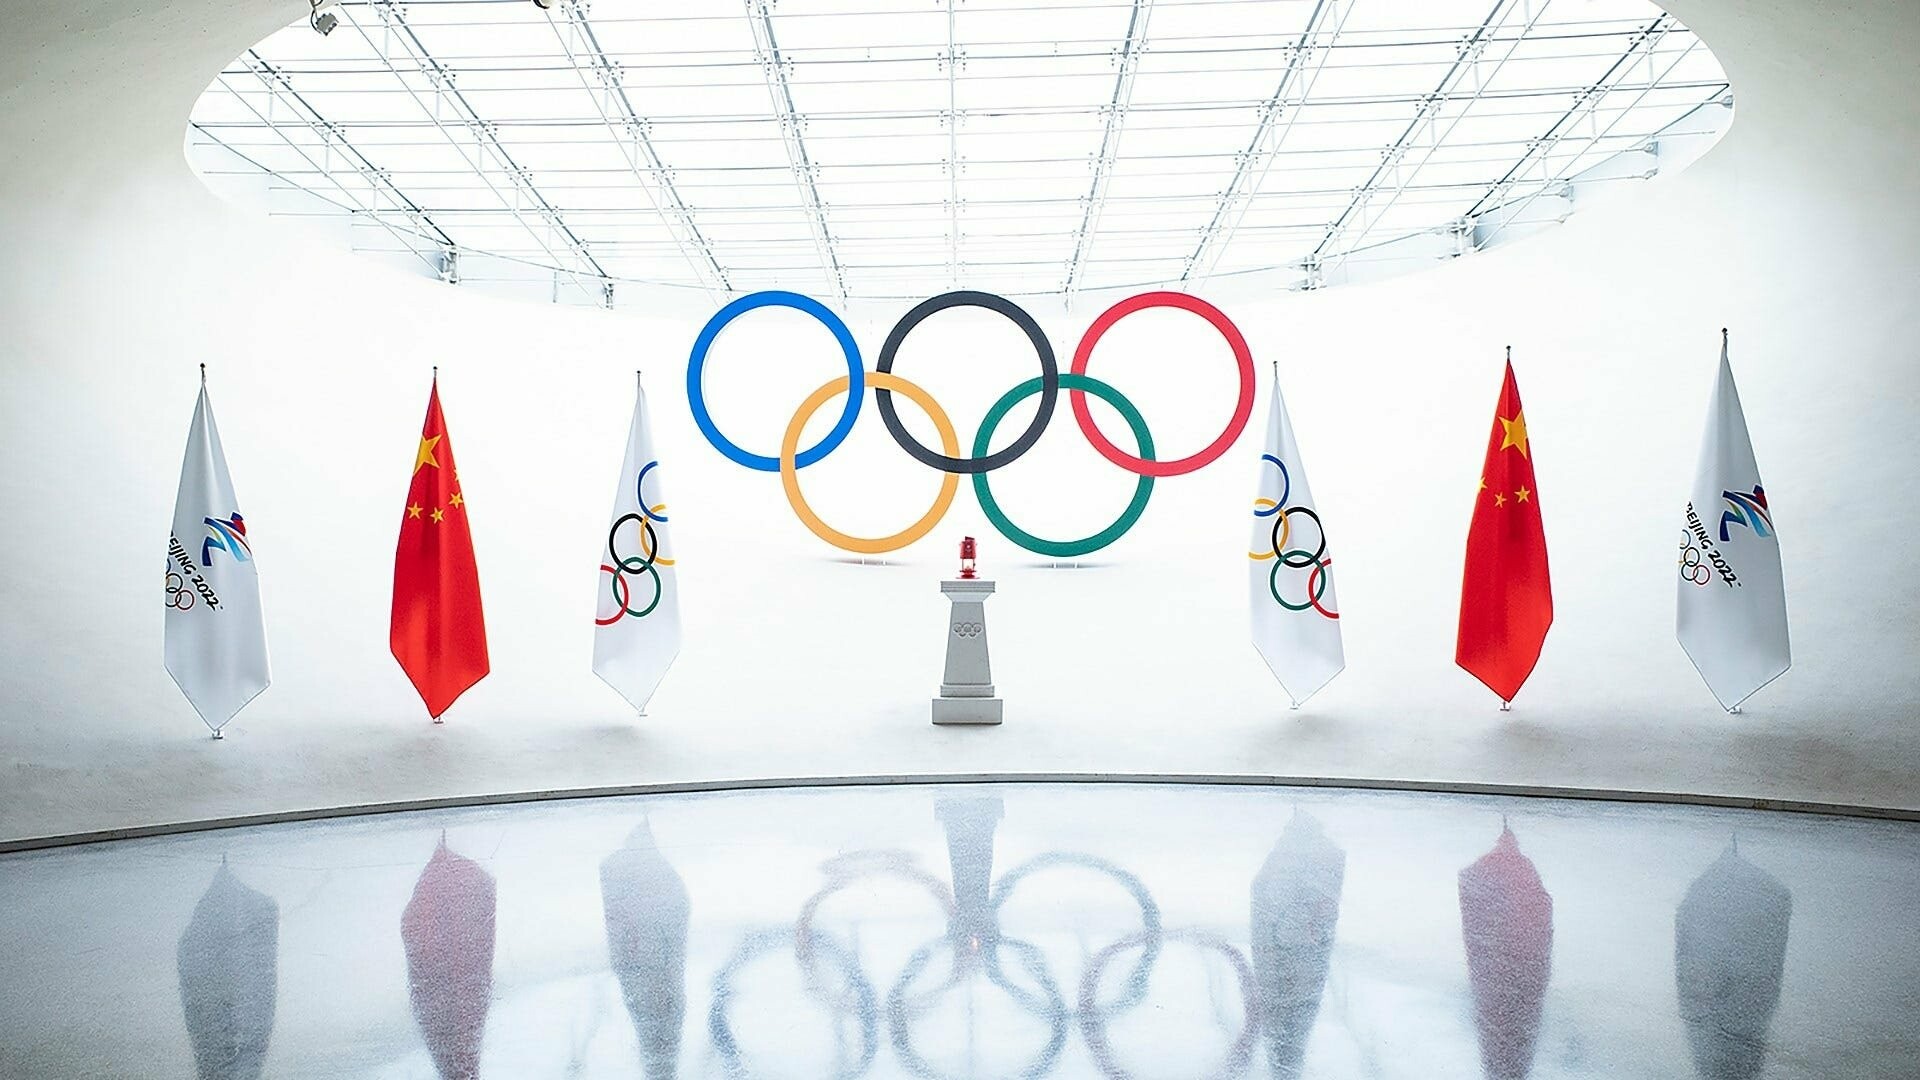 Beijing Winter Olympics, Athletes' achievements, Dream of victory, Inspiring performances, 1920x1080 Full HD Desktop